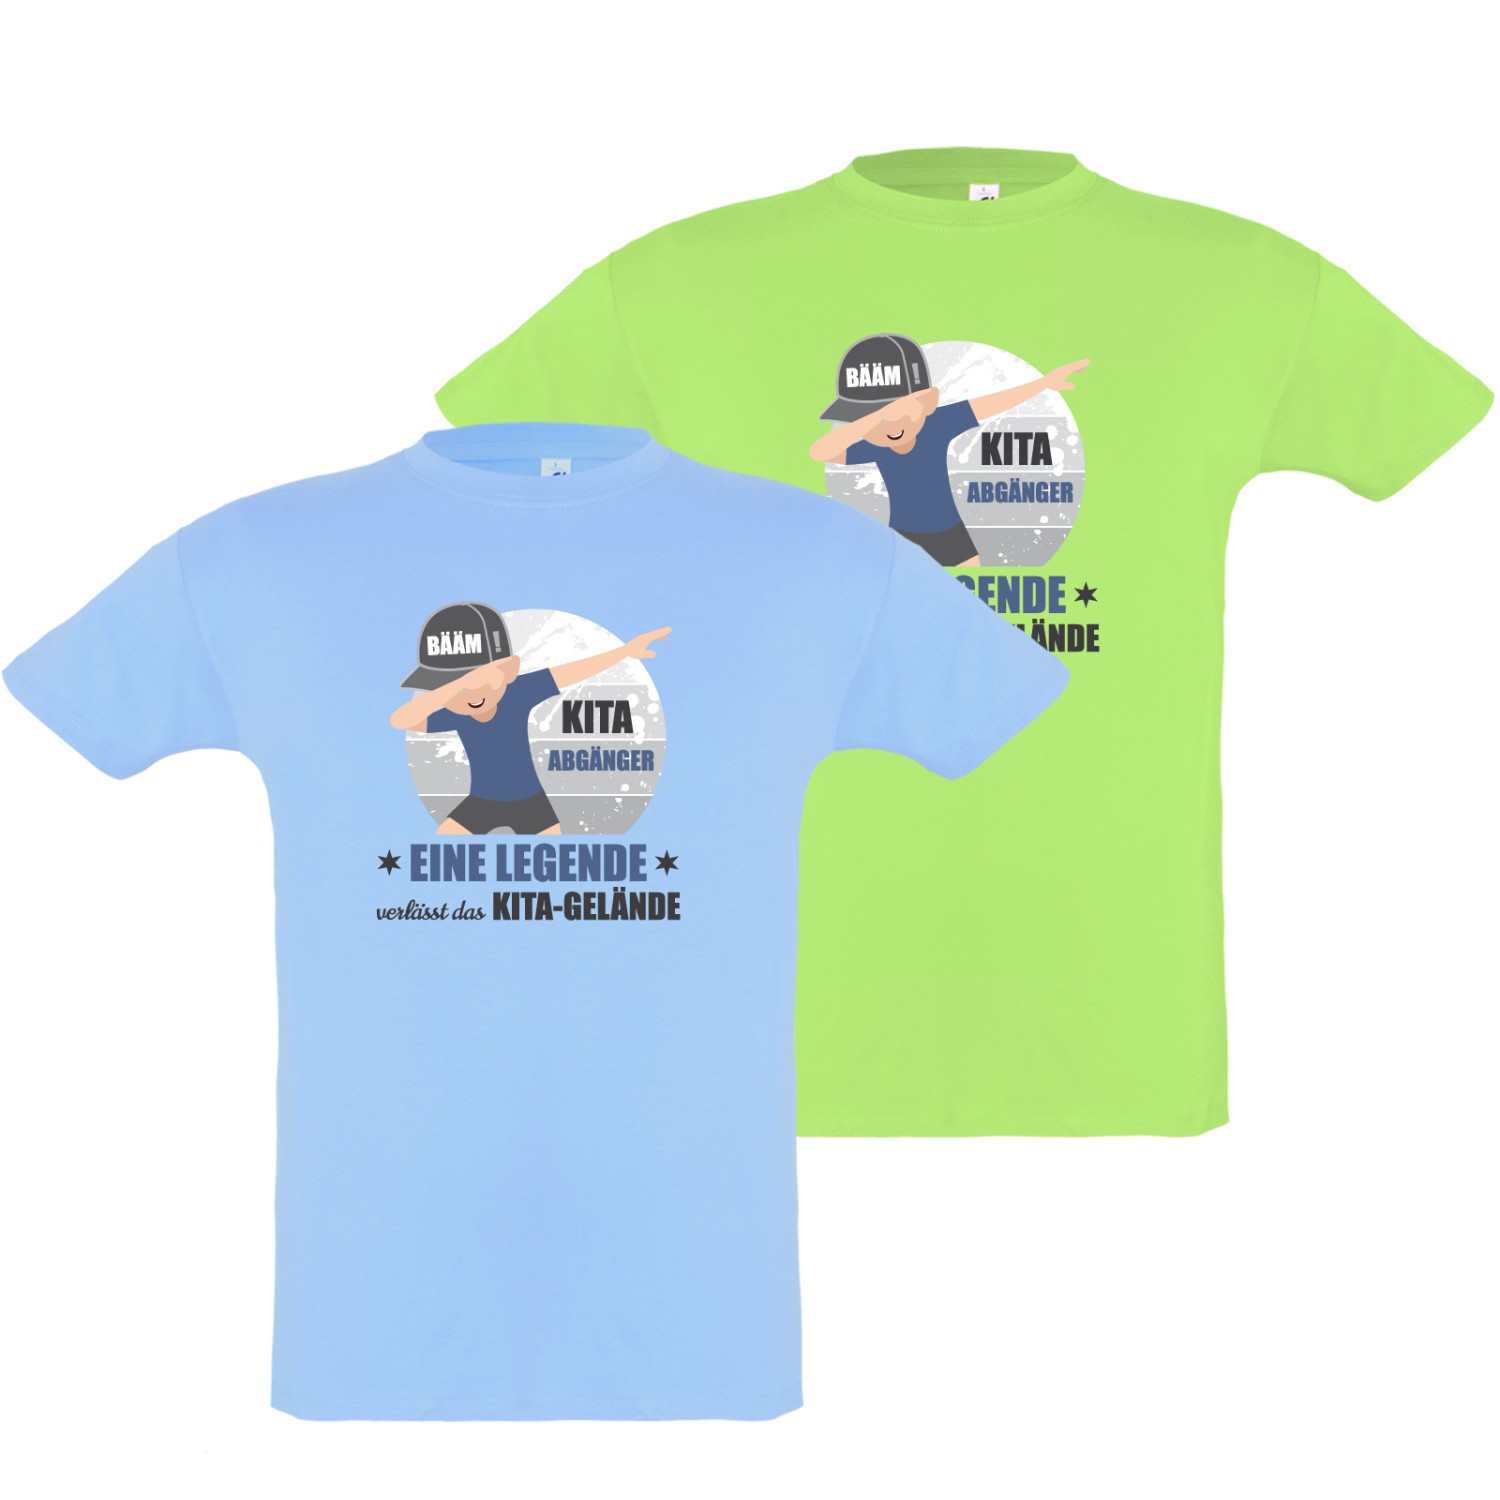 1. Foto T-Shirt Kita Jungs Abgänger Legende Shirt Kindegarten (Farbe: limette Größe: 118/128)